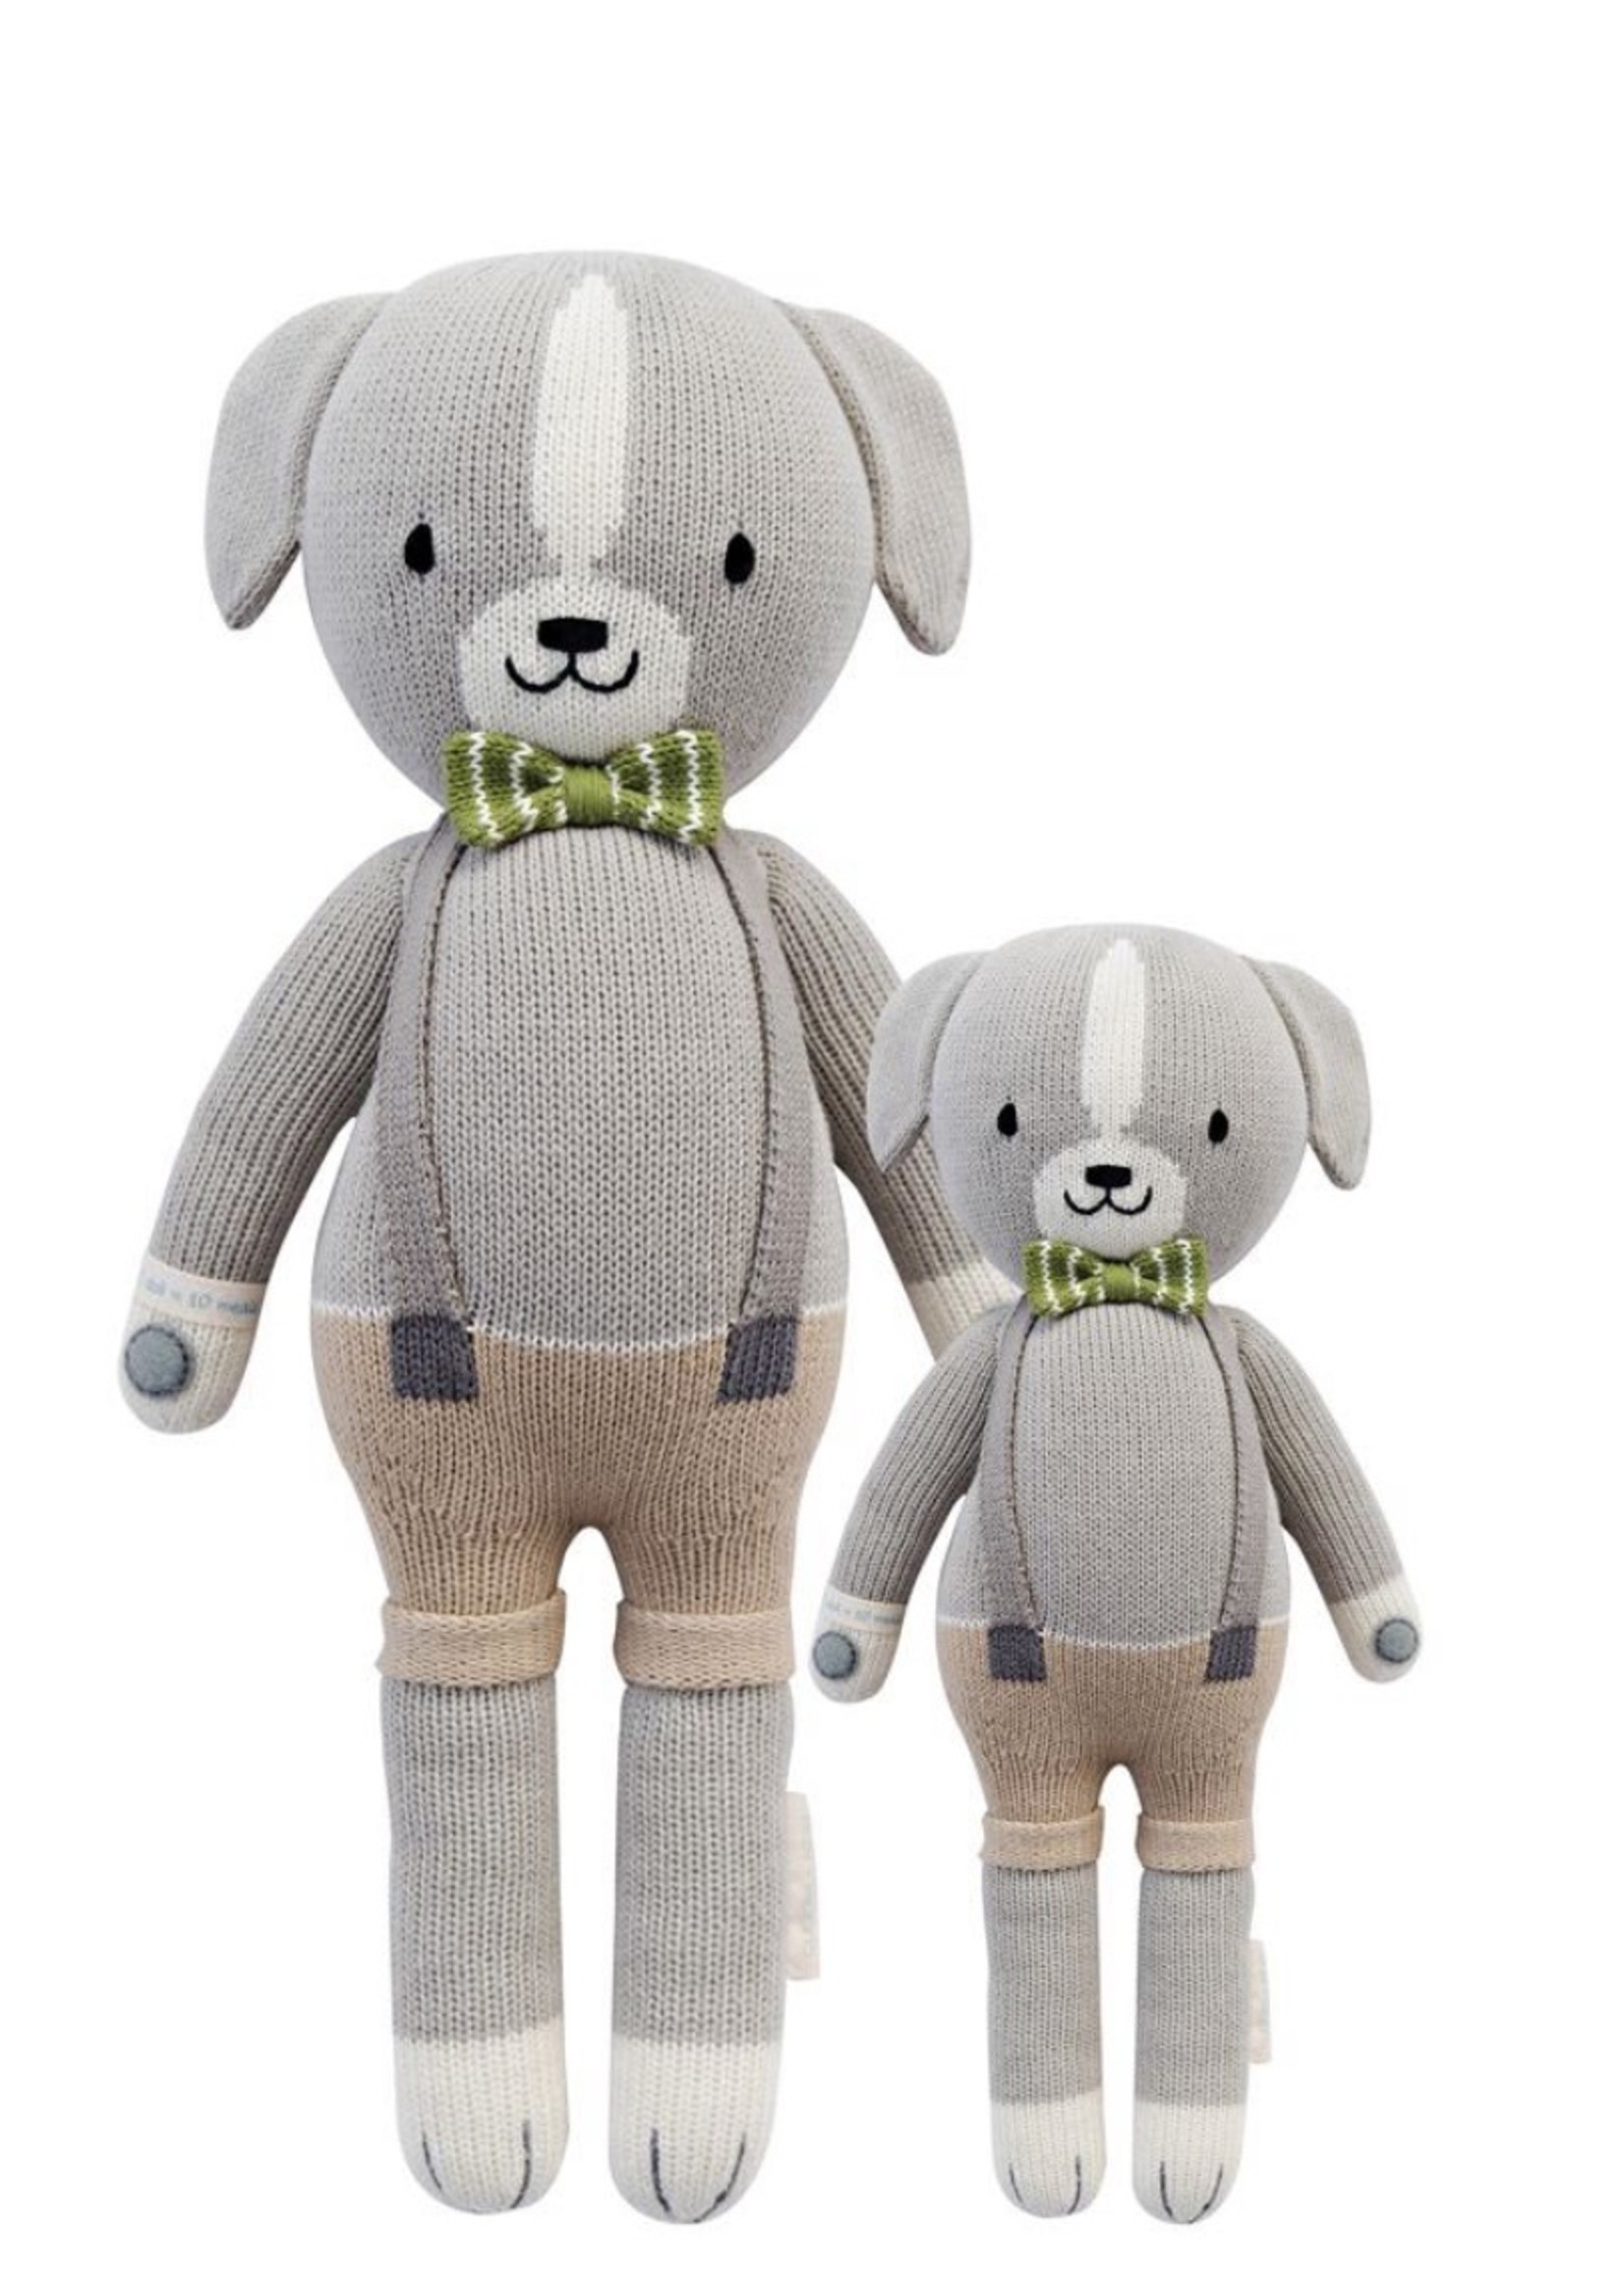 cuddle + kind Mini Dog Knit Doll NOAH